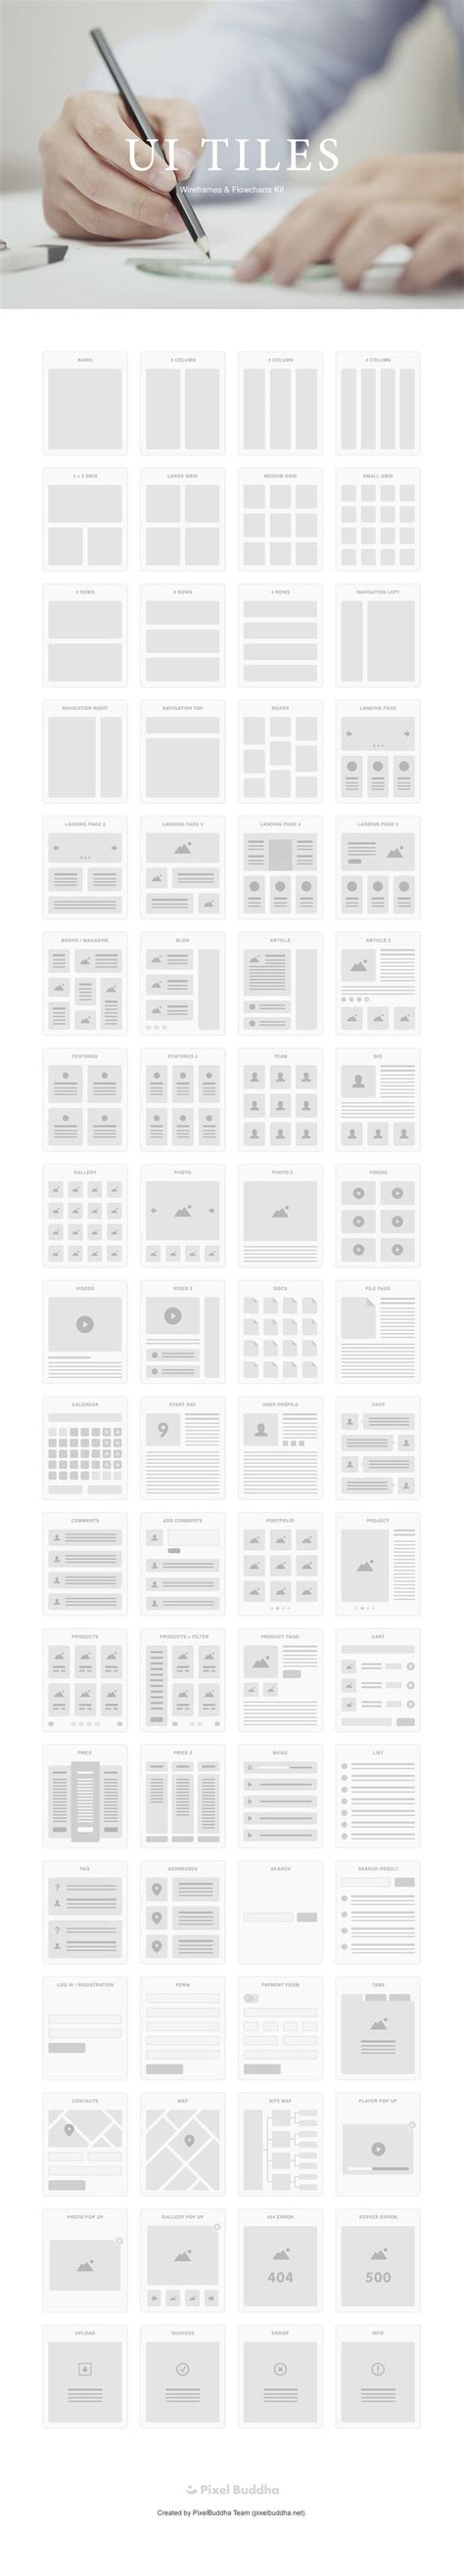 images  layout  pinterest magazine design spreads